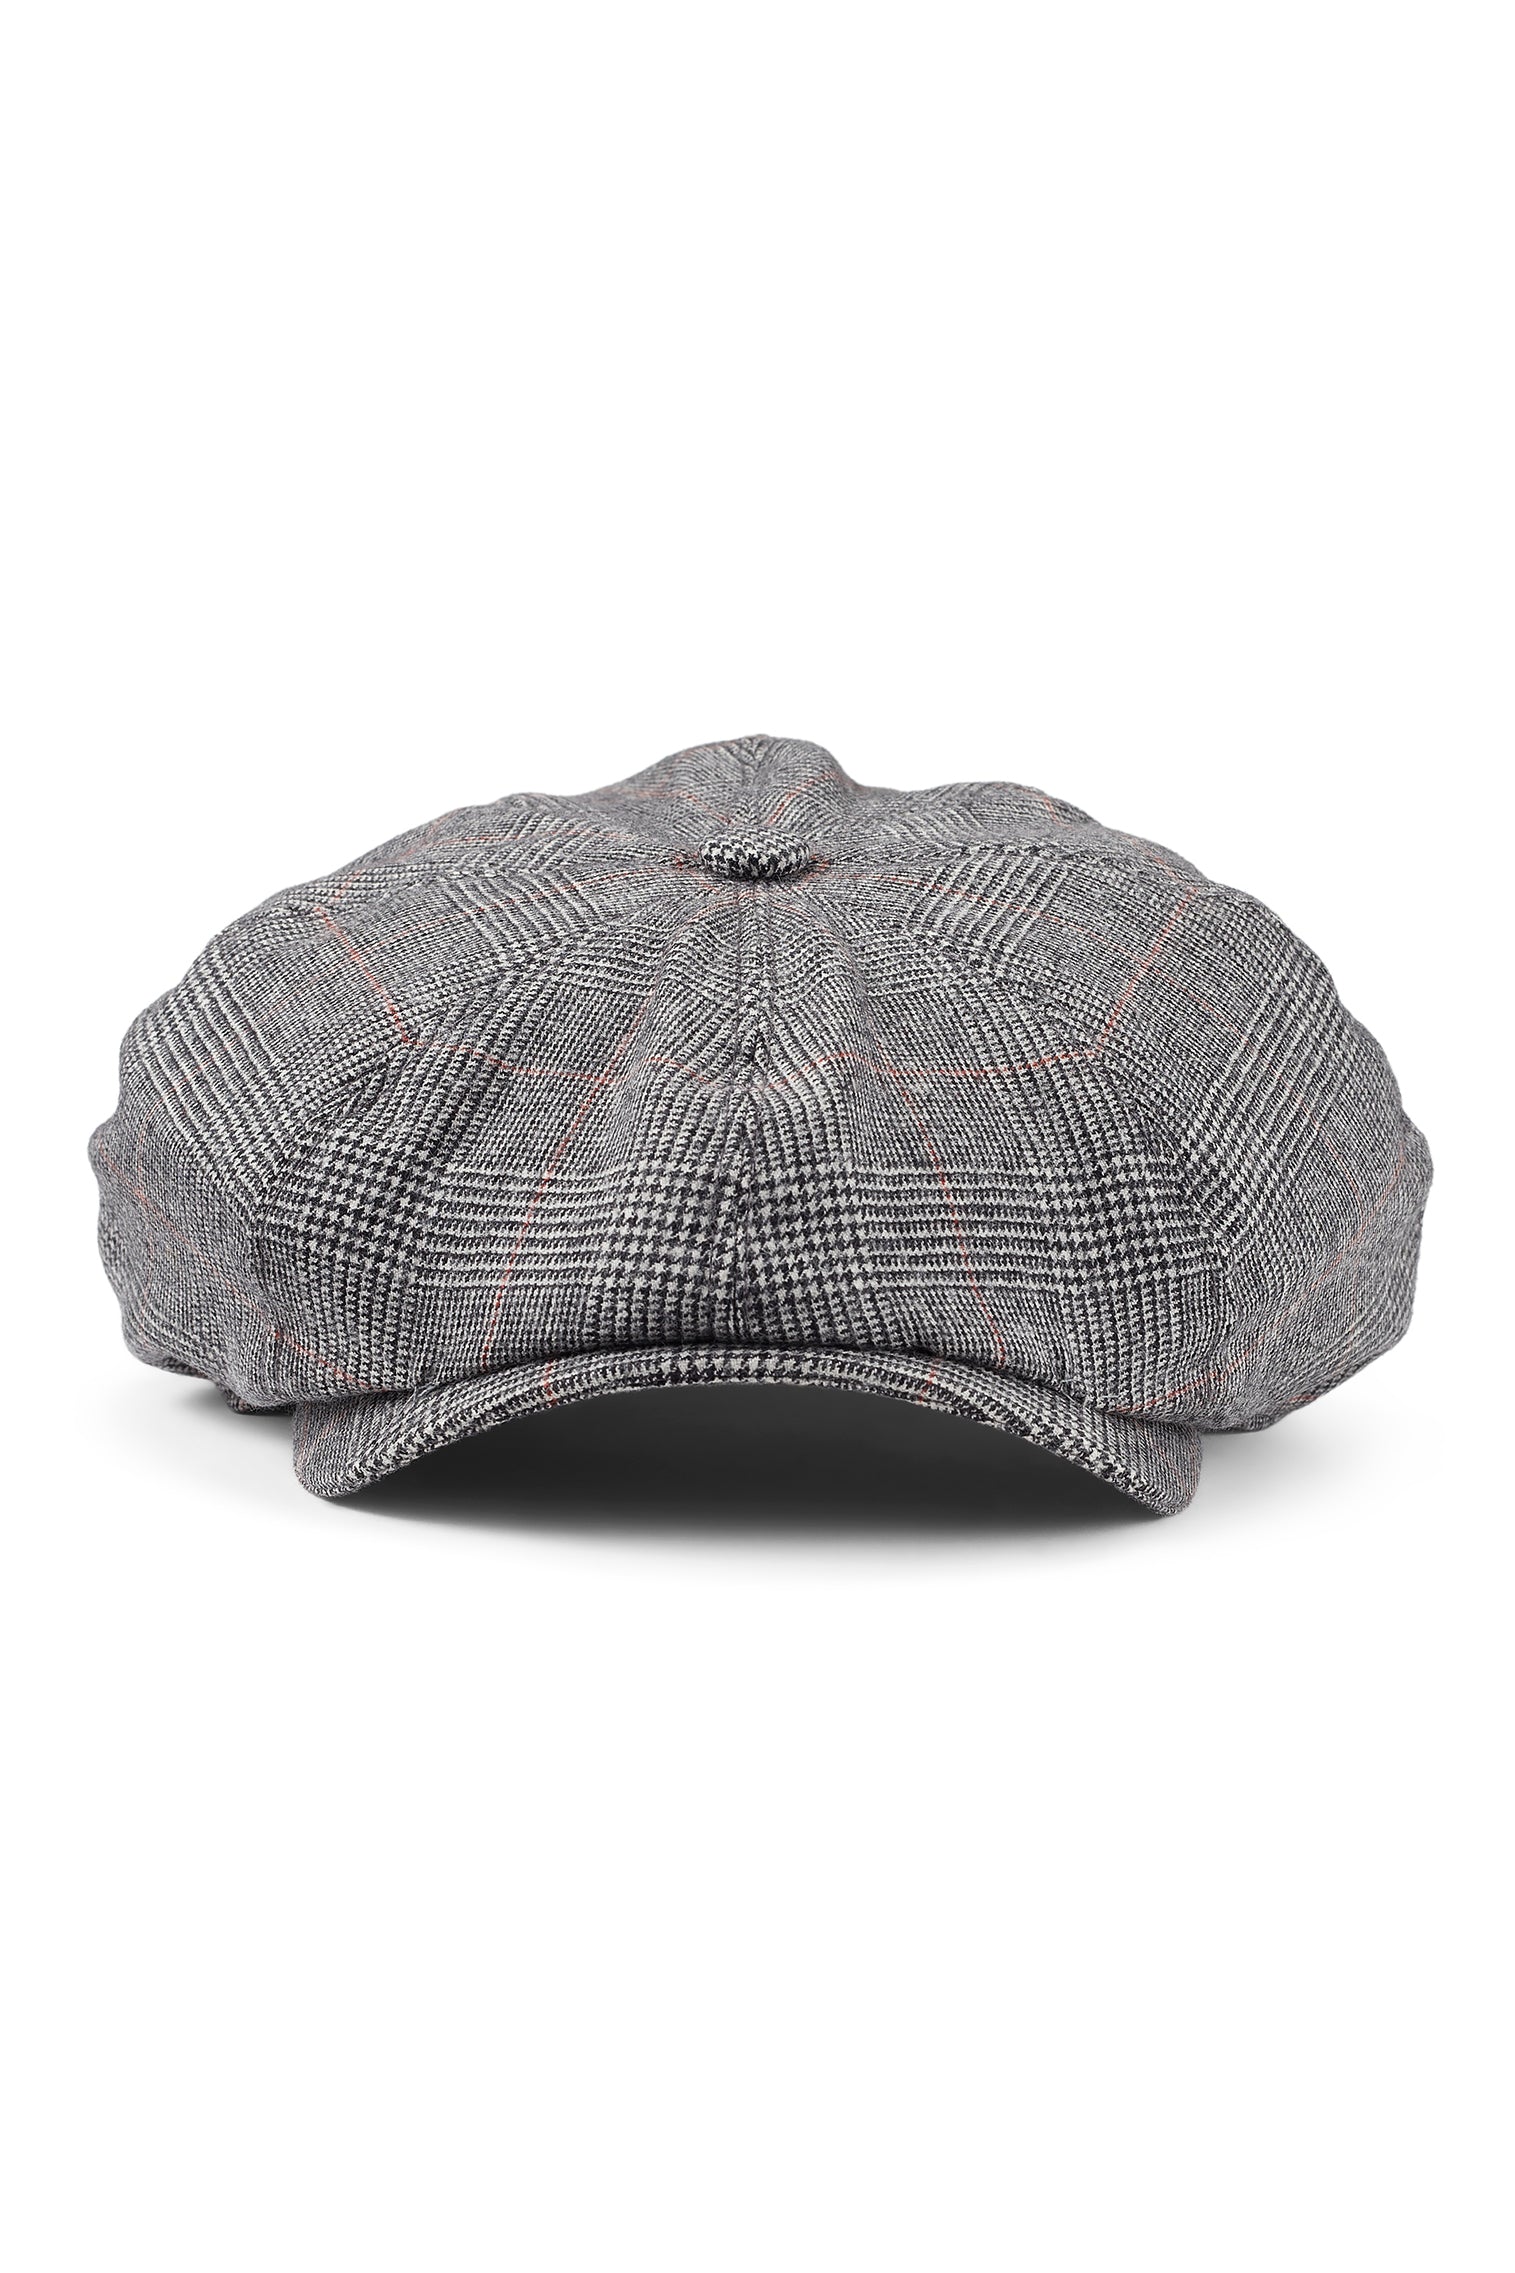 Highgrove Grey Bakerboy Cap - New Season Men's Hats - Lock & Co. Hatters London UK